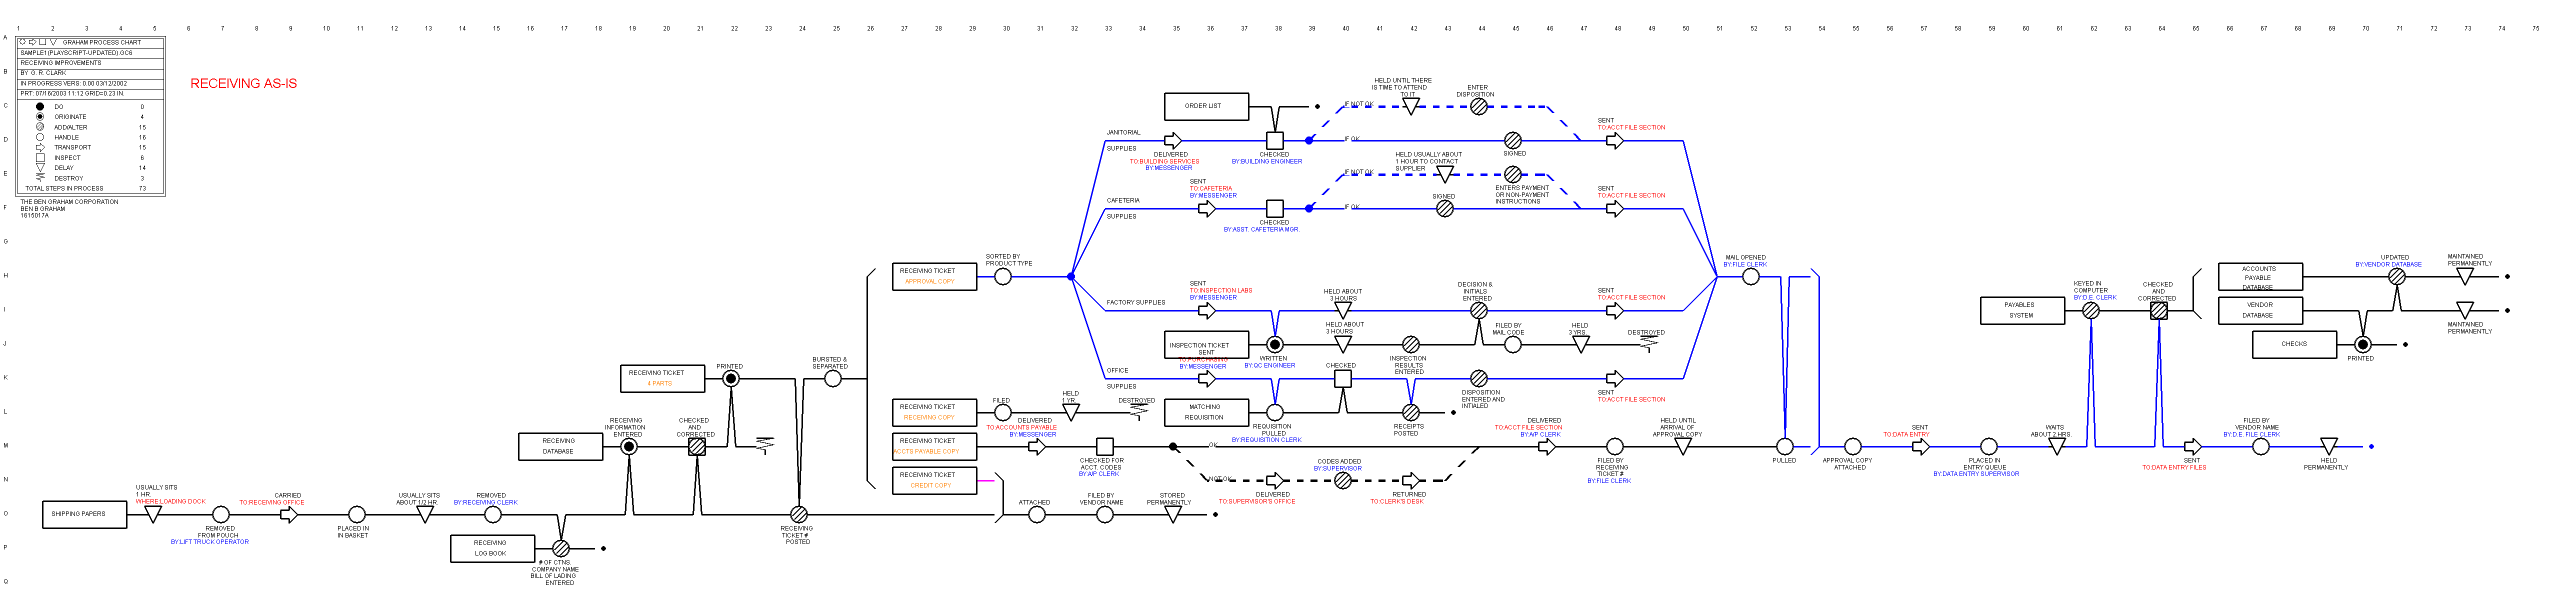 Graham Process Map - Select Playscript Procedure path